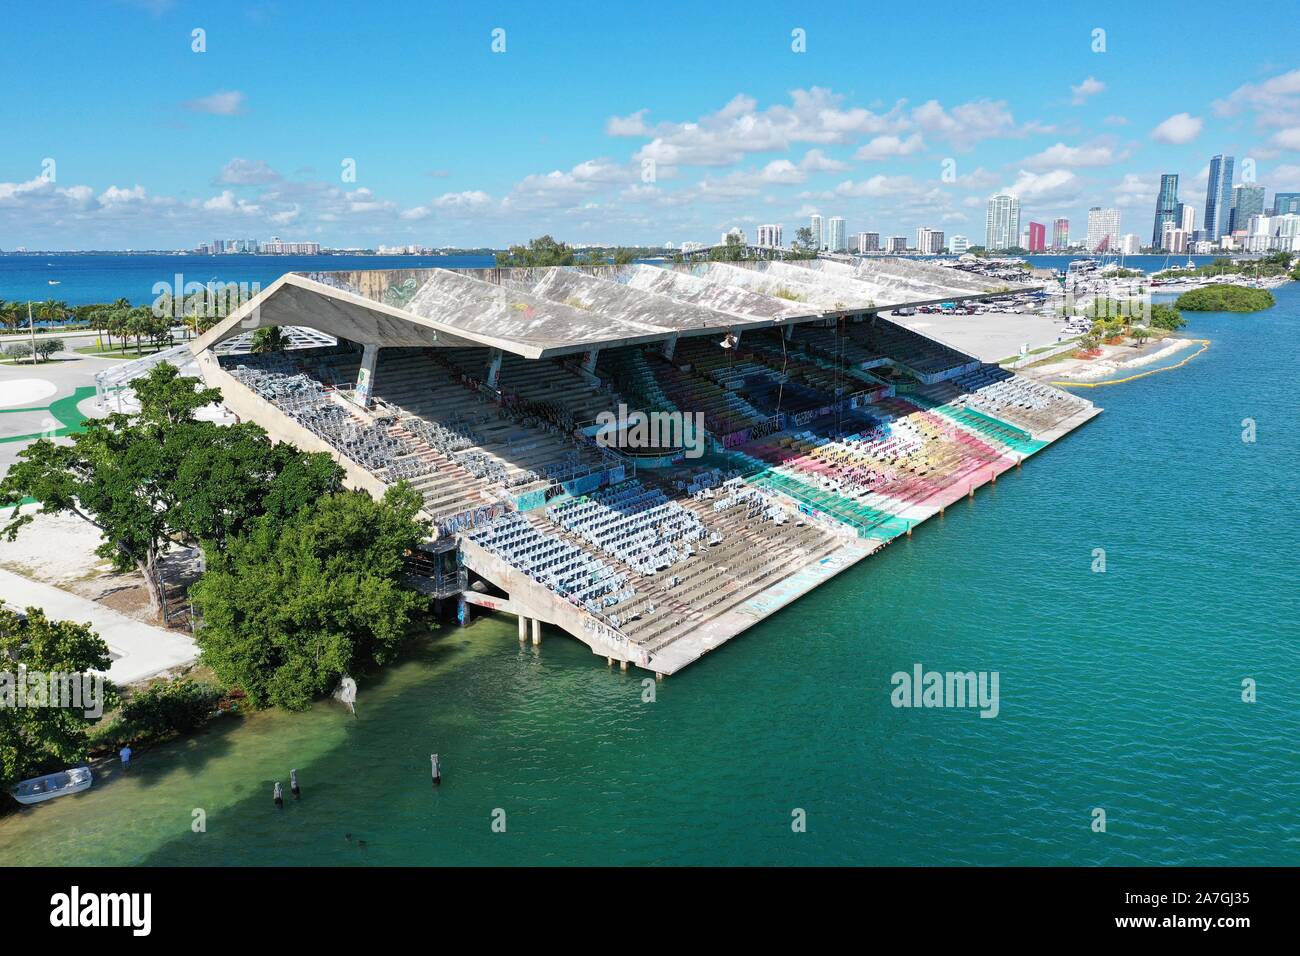 Miami Marine Stadium by Hilario Candela, The Strength of Architecture